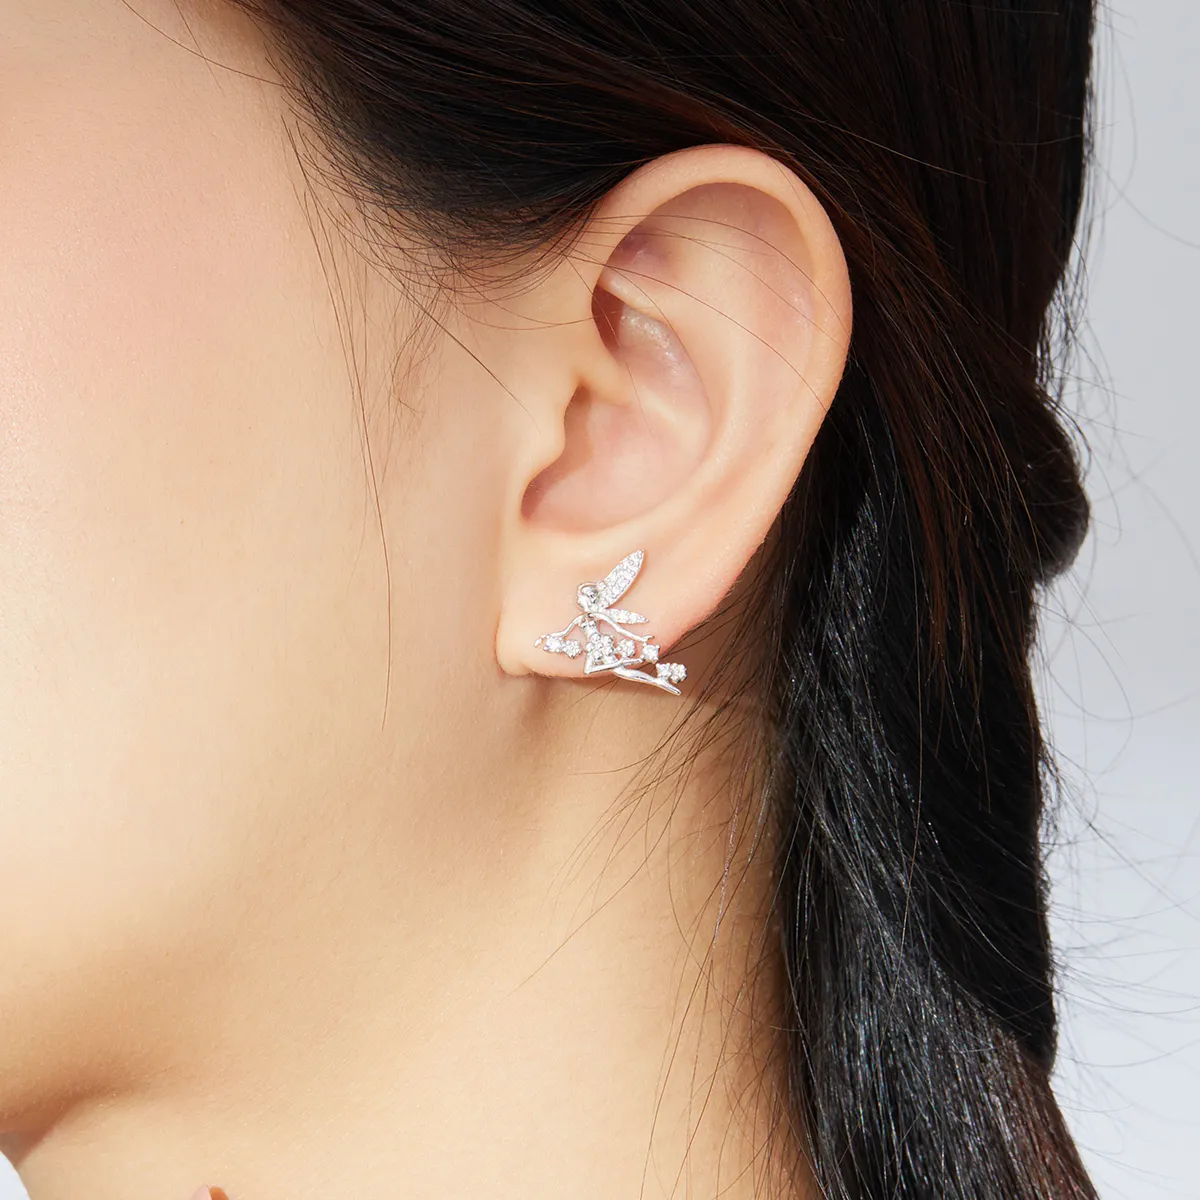 Pandora Style Flower Elf Stud Earrings - BSE341